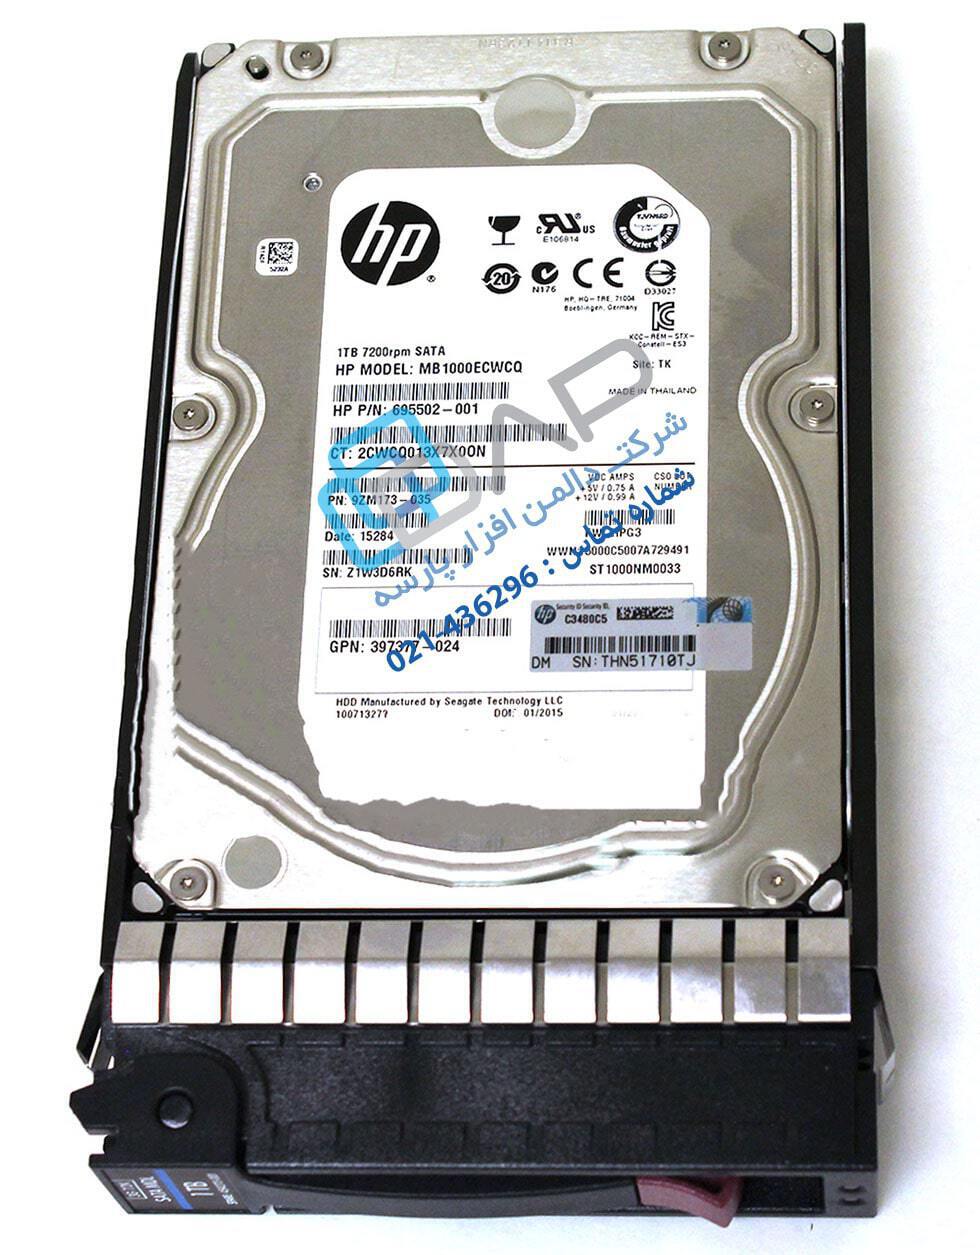  HP 1TB 3G SATA 7.2K rpm LFF (3.5-inch) Quick-release Midline Hard Drive (695502-001) 